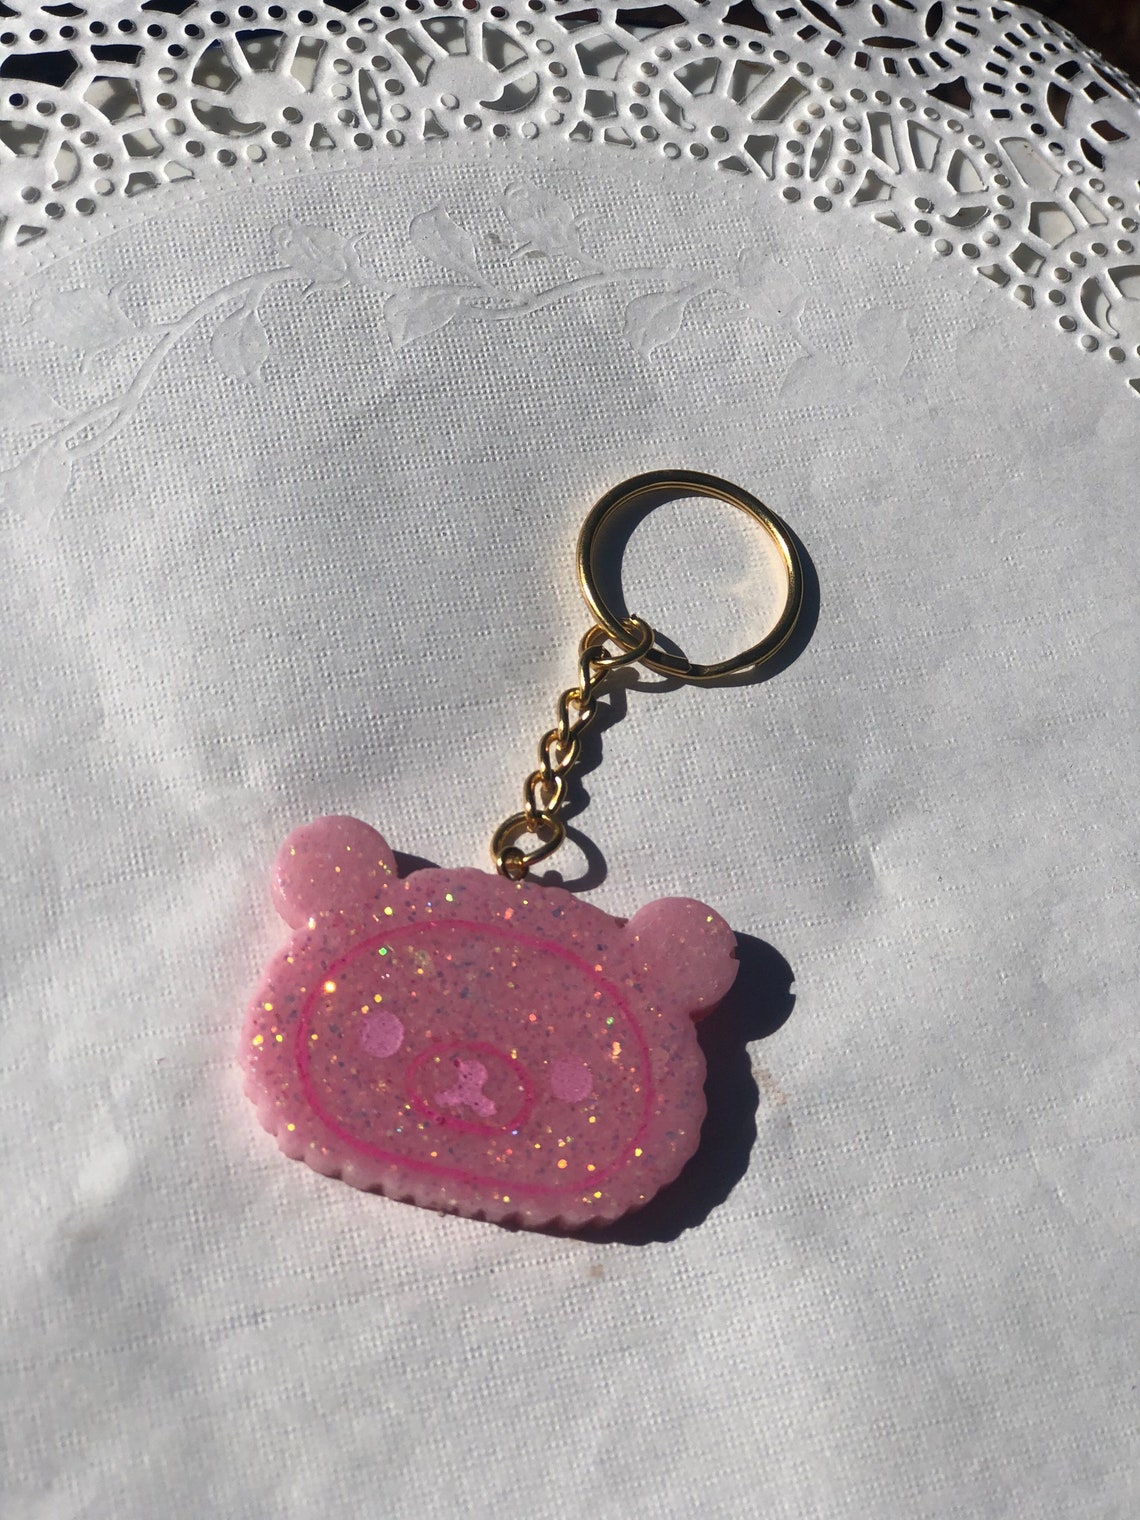 Pink Rilakkuma keychain charm | Etsy